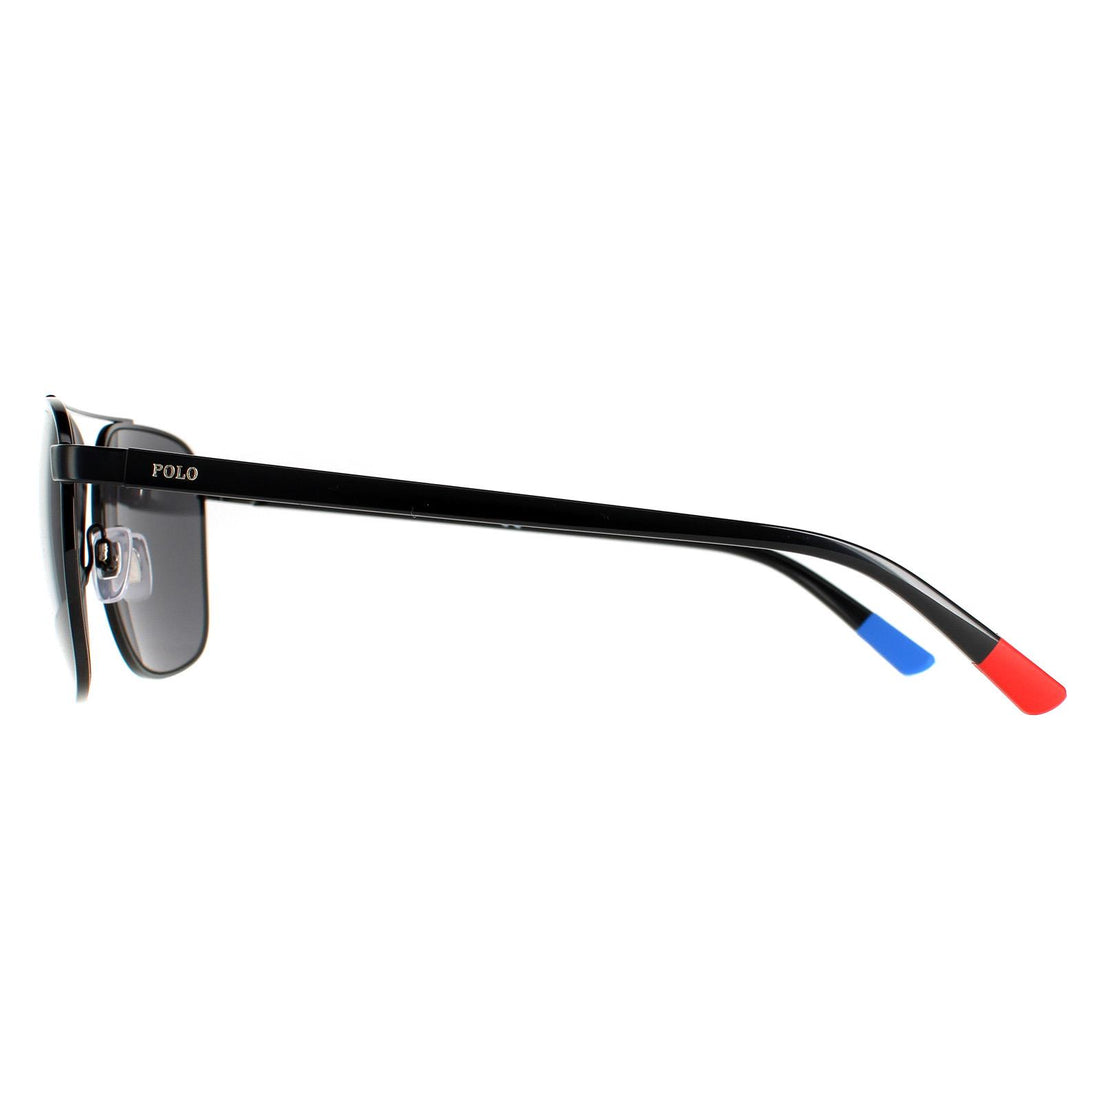 Polo Ralph Lauren Sunglasses PH3135 900381 Shiny Black Grey Polarized